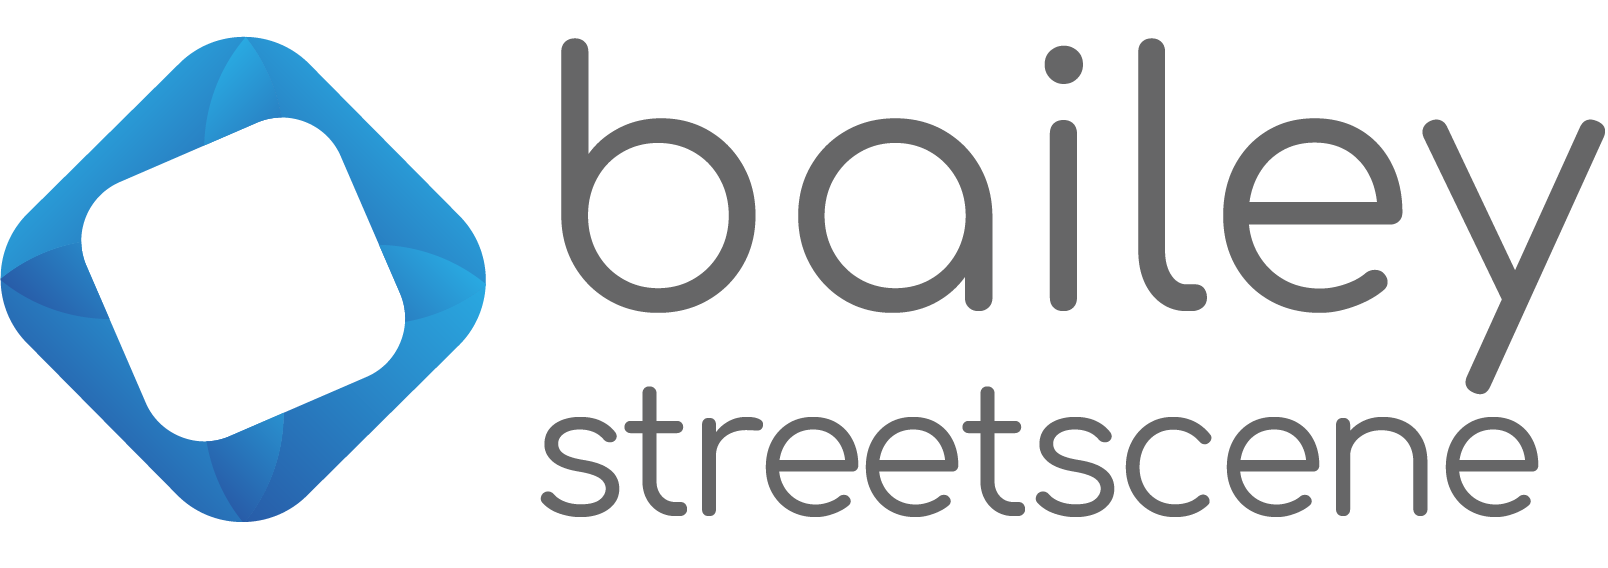 Bailey Streetscene limited